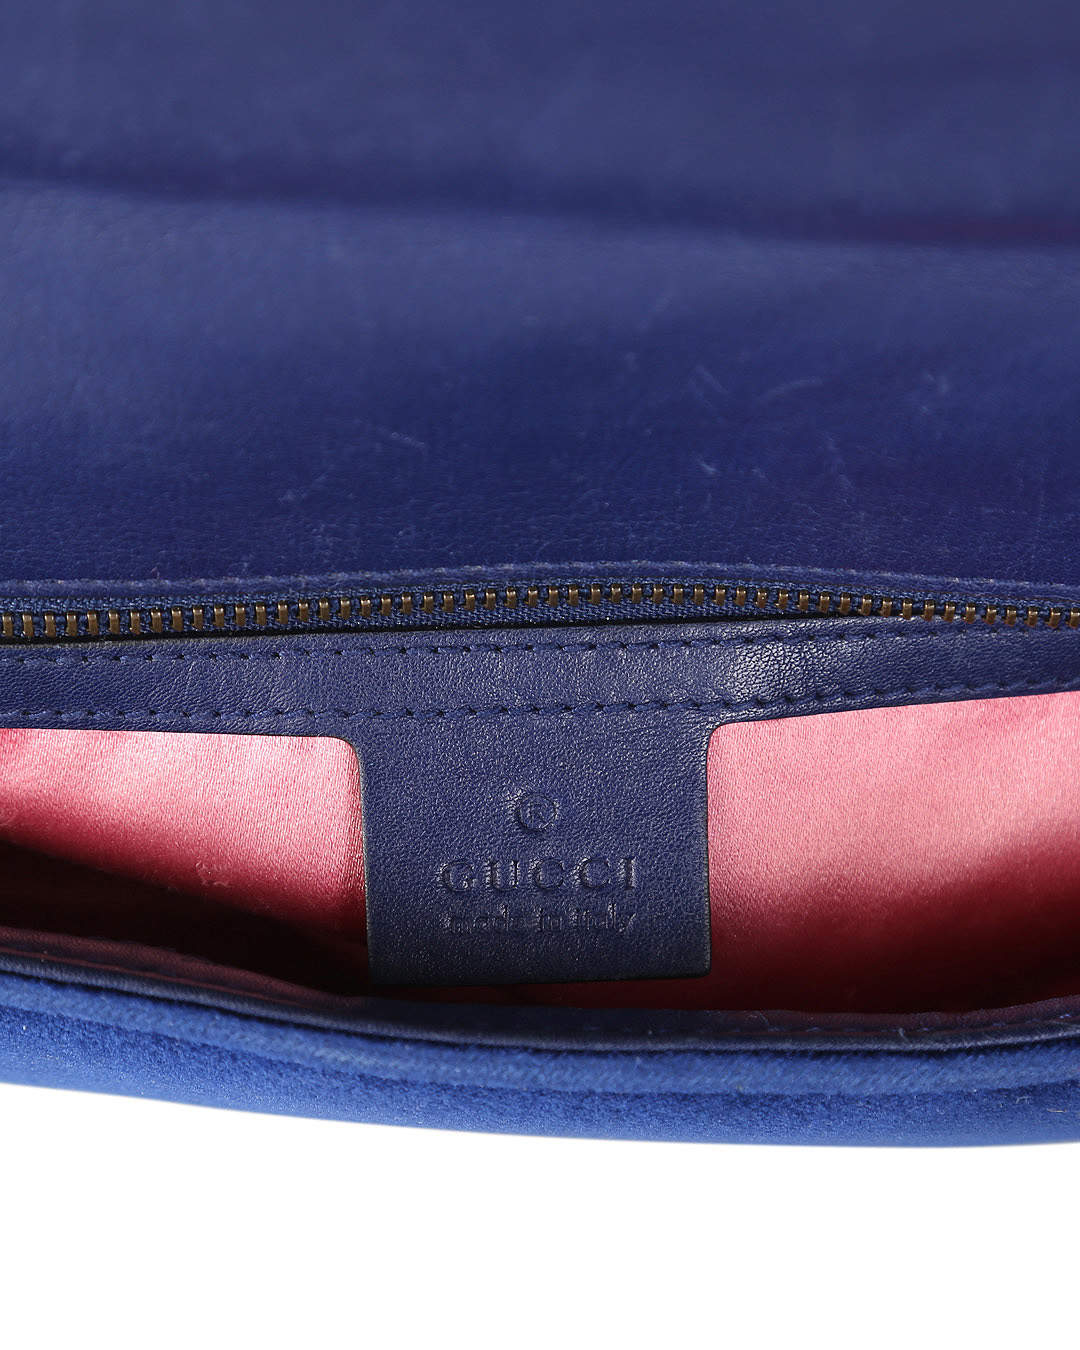 Gucci // Blue Velvet Matelasse GG Marmont Mini Shoulder Bag – VSP